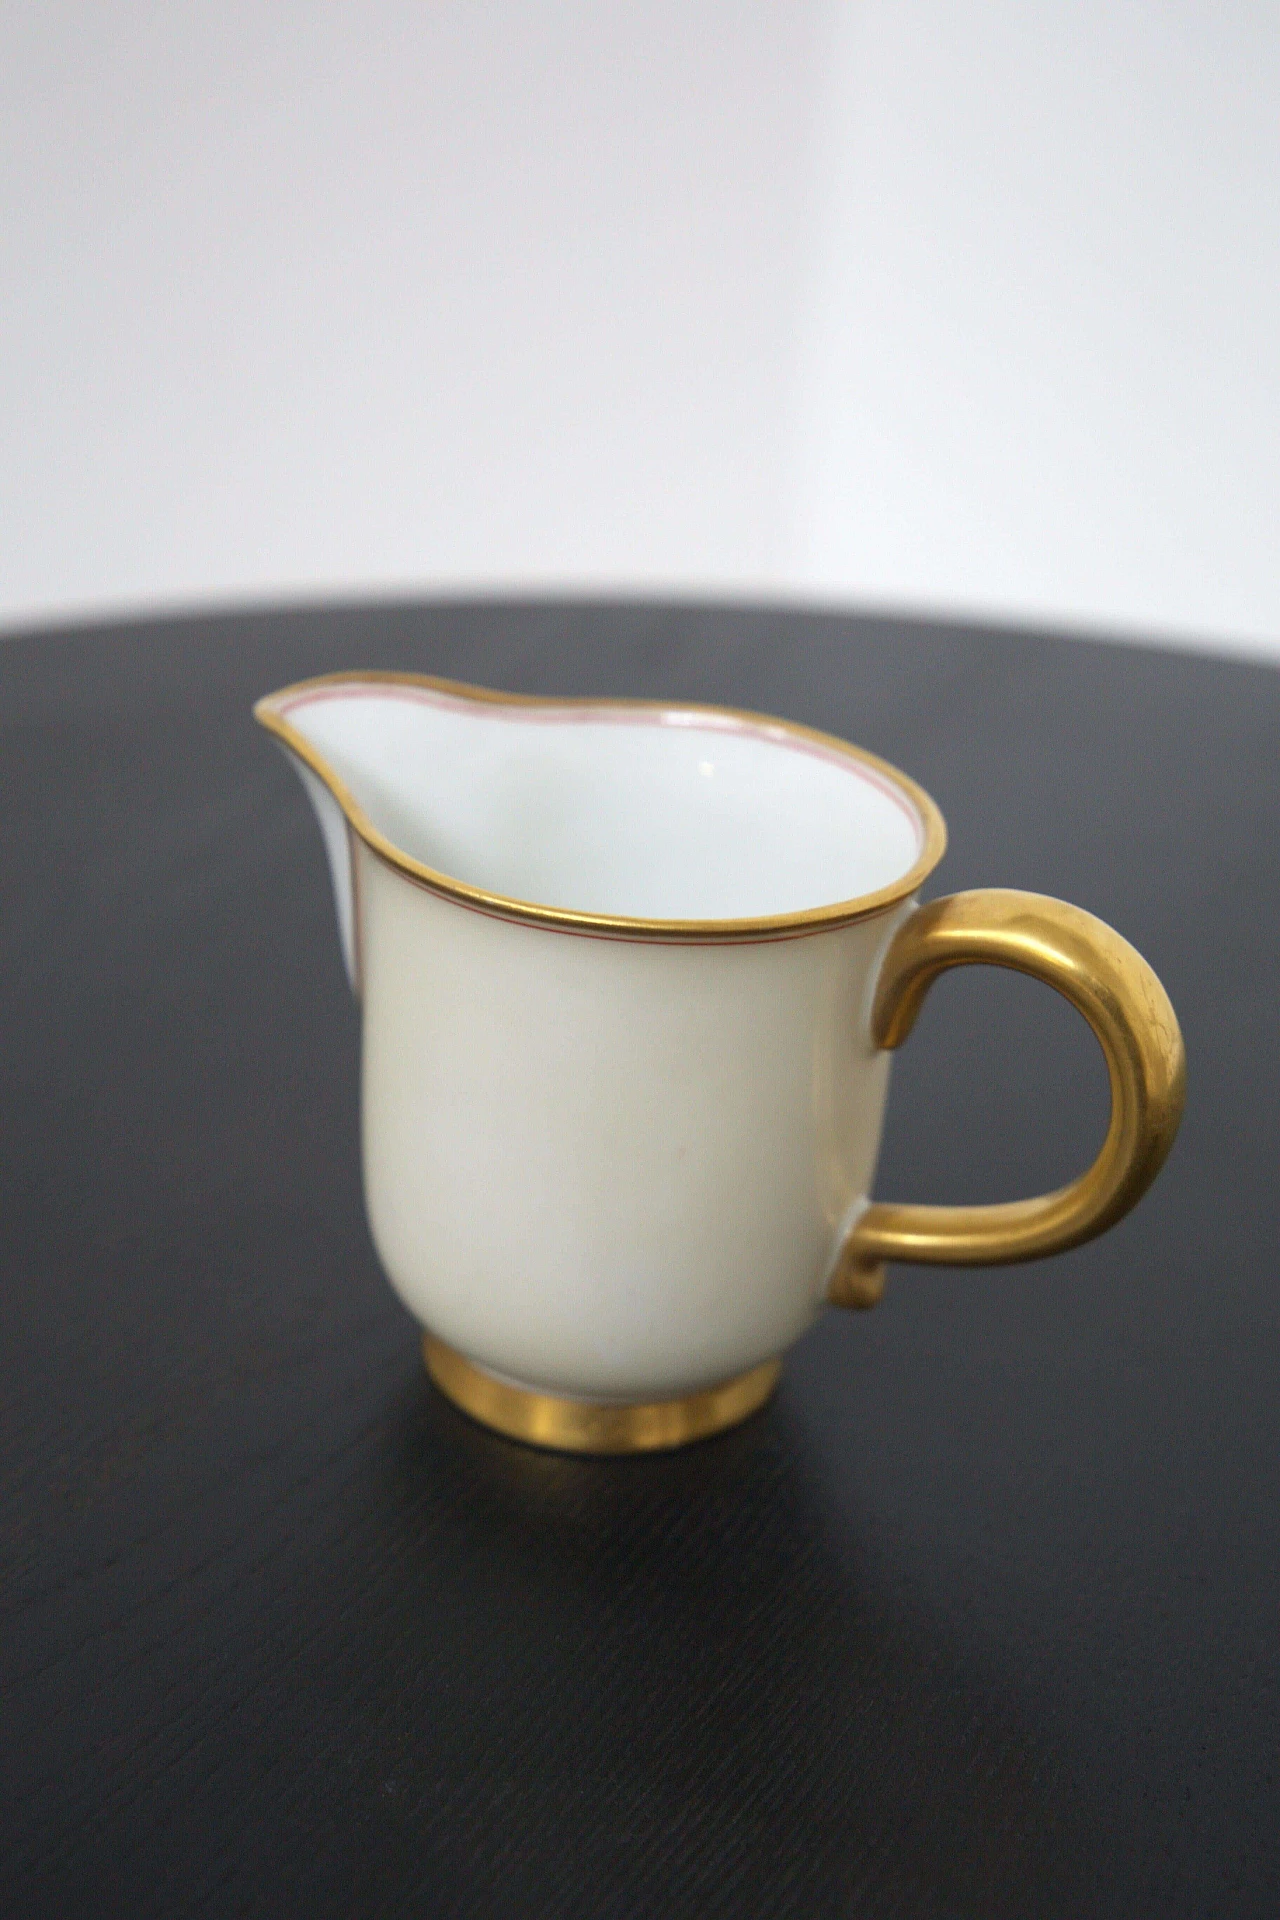 Ceramic and pure gold tea set by Gio Ponti for Ginori, 1930s 1477496